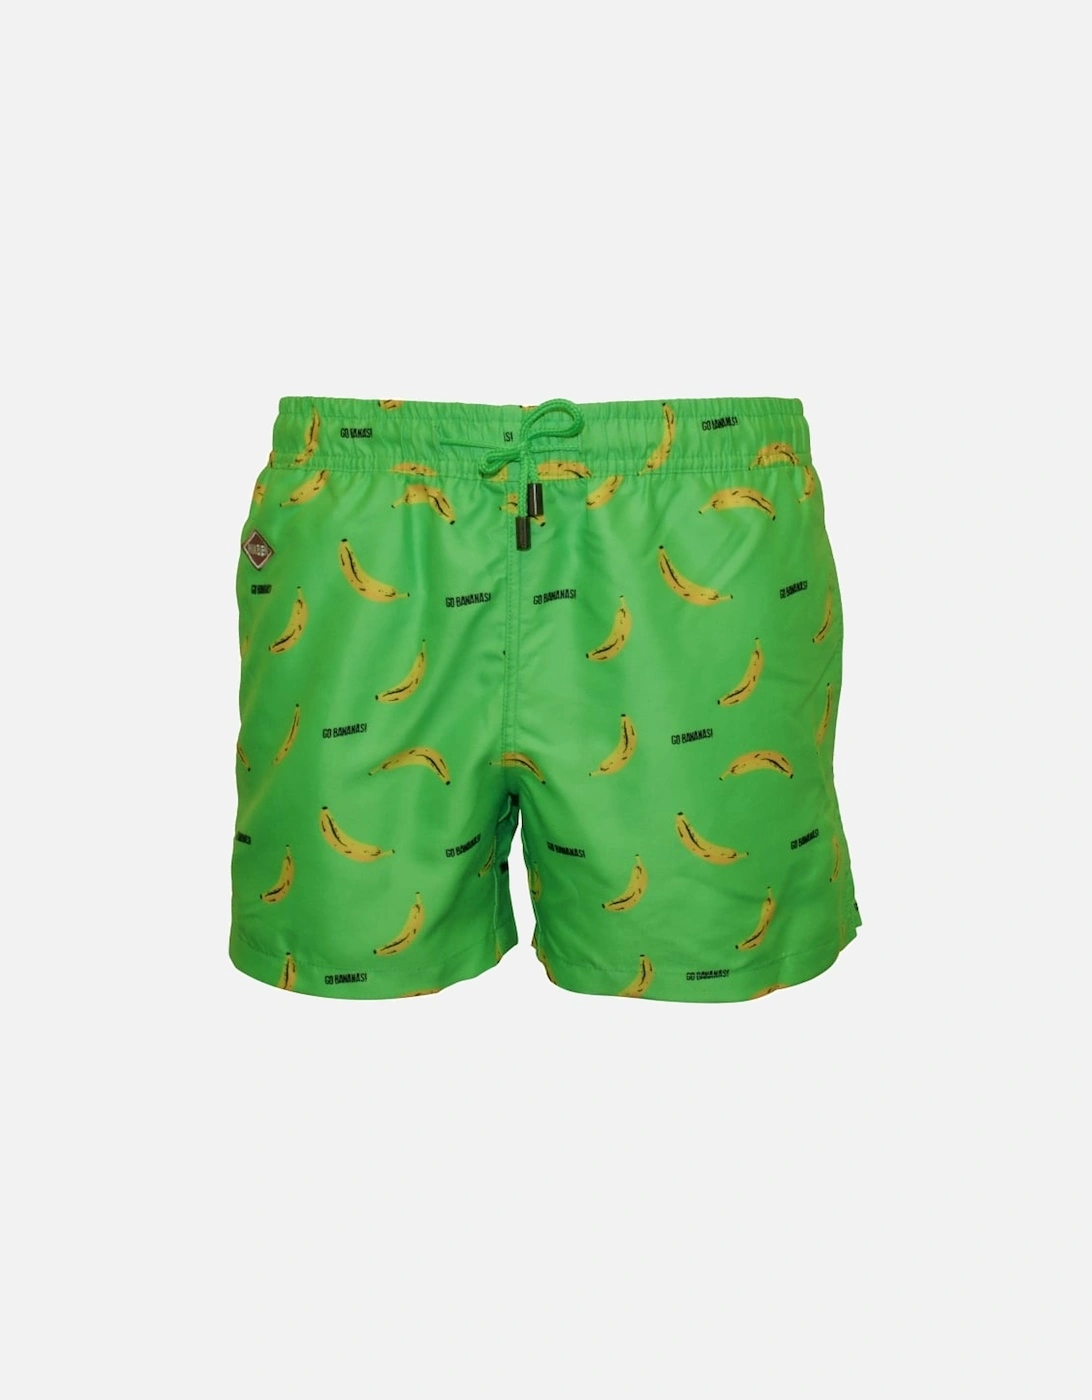 Go Bananas Swim Shorts, Green, 6 of 5